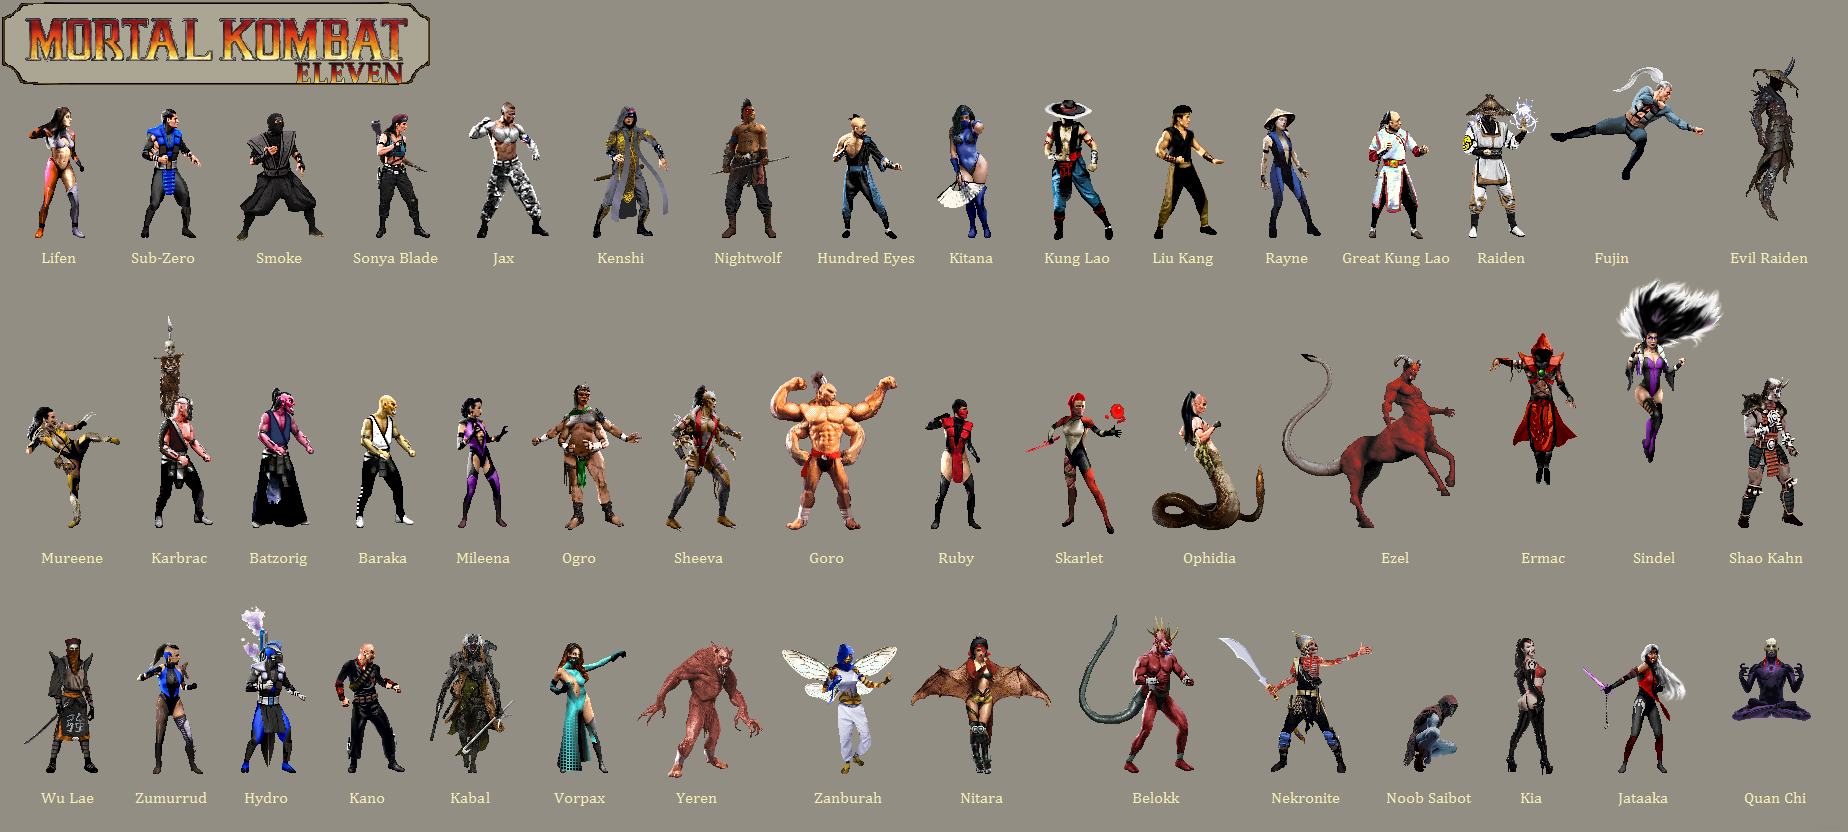 Mortal Kombat 12 Roster Wishlist by DuskMindAbyss on DeviantArt